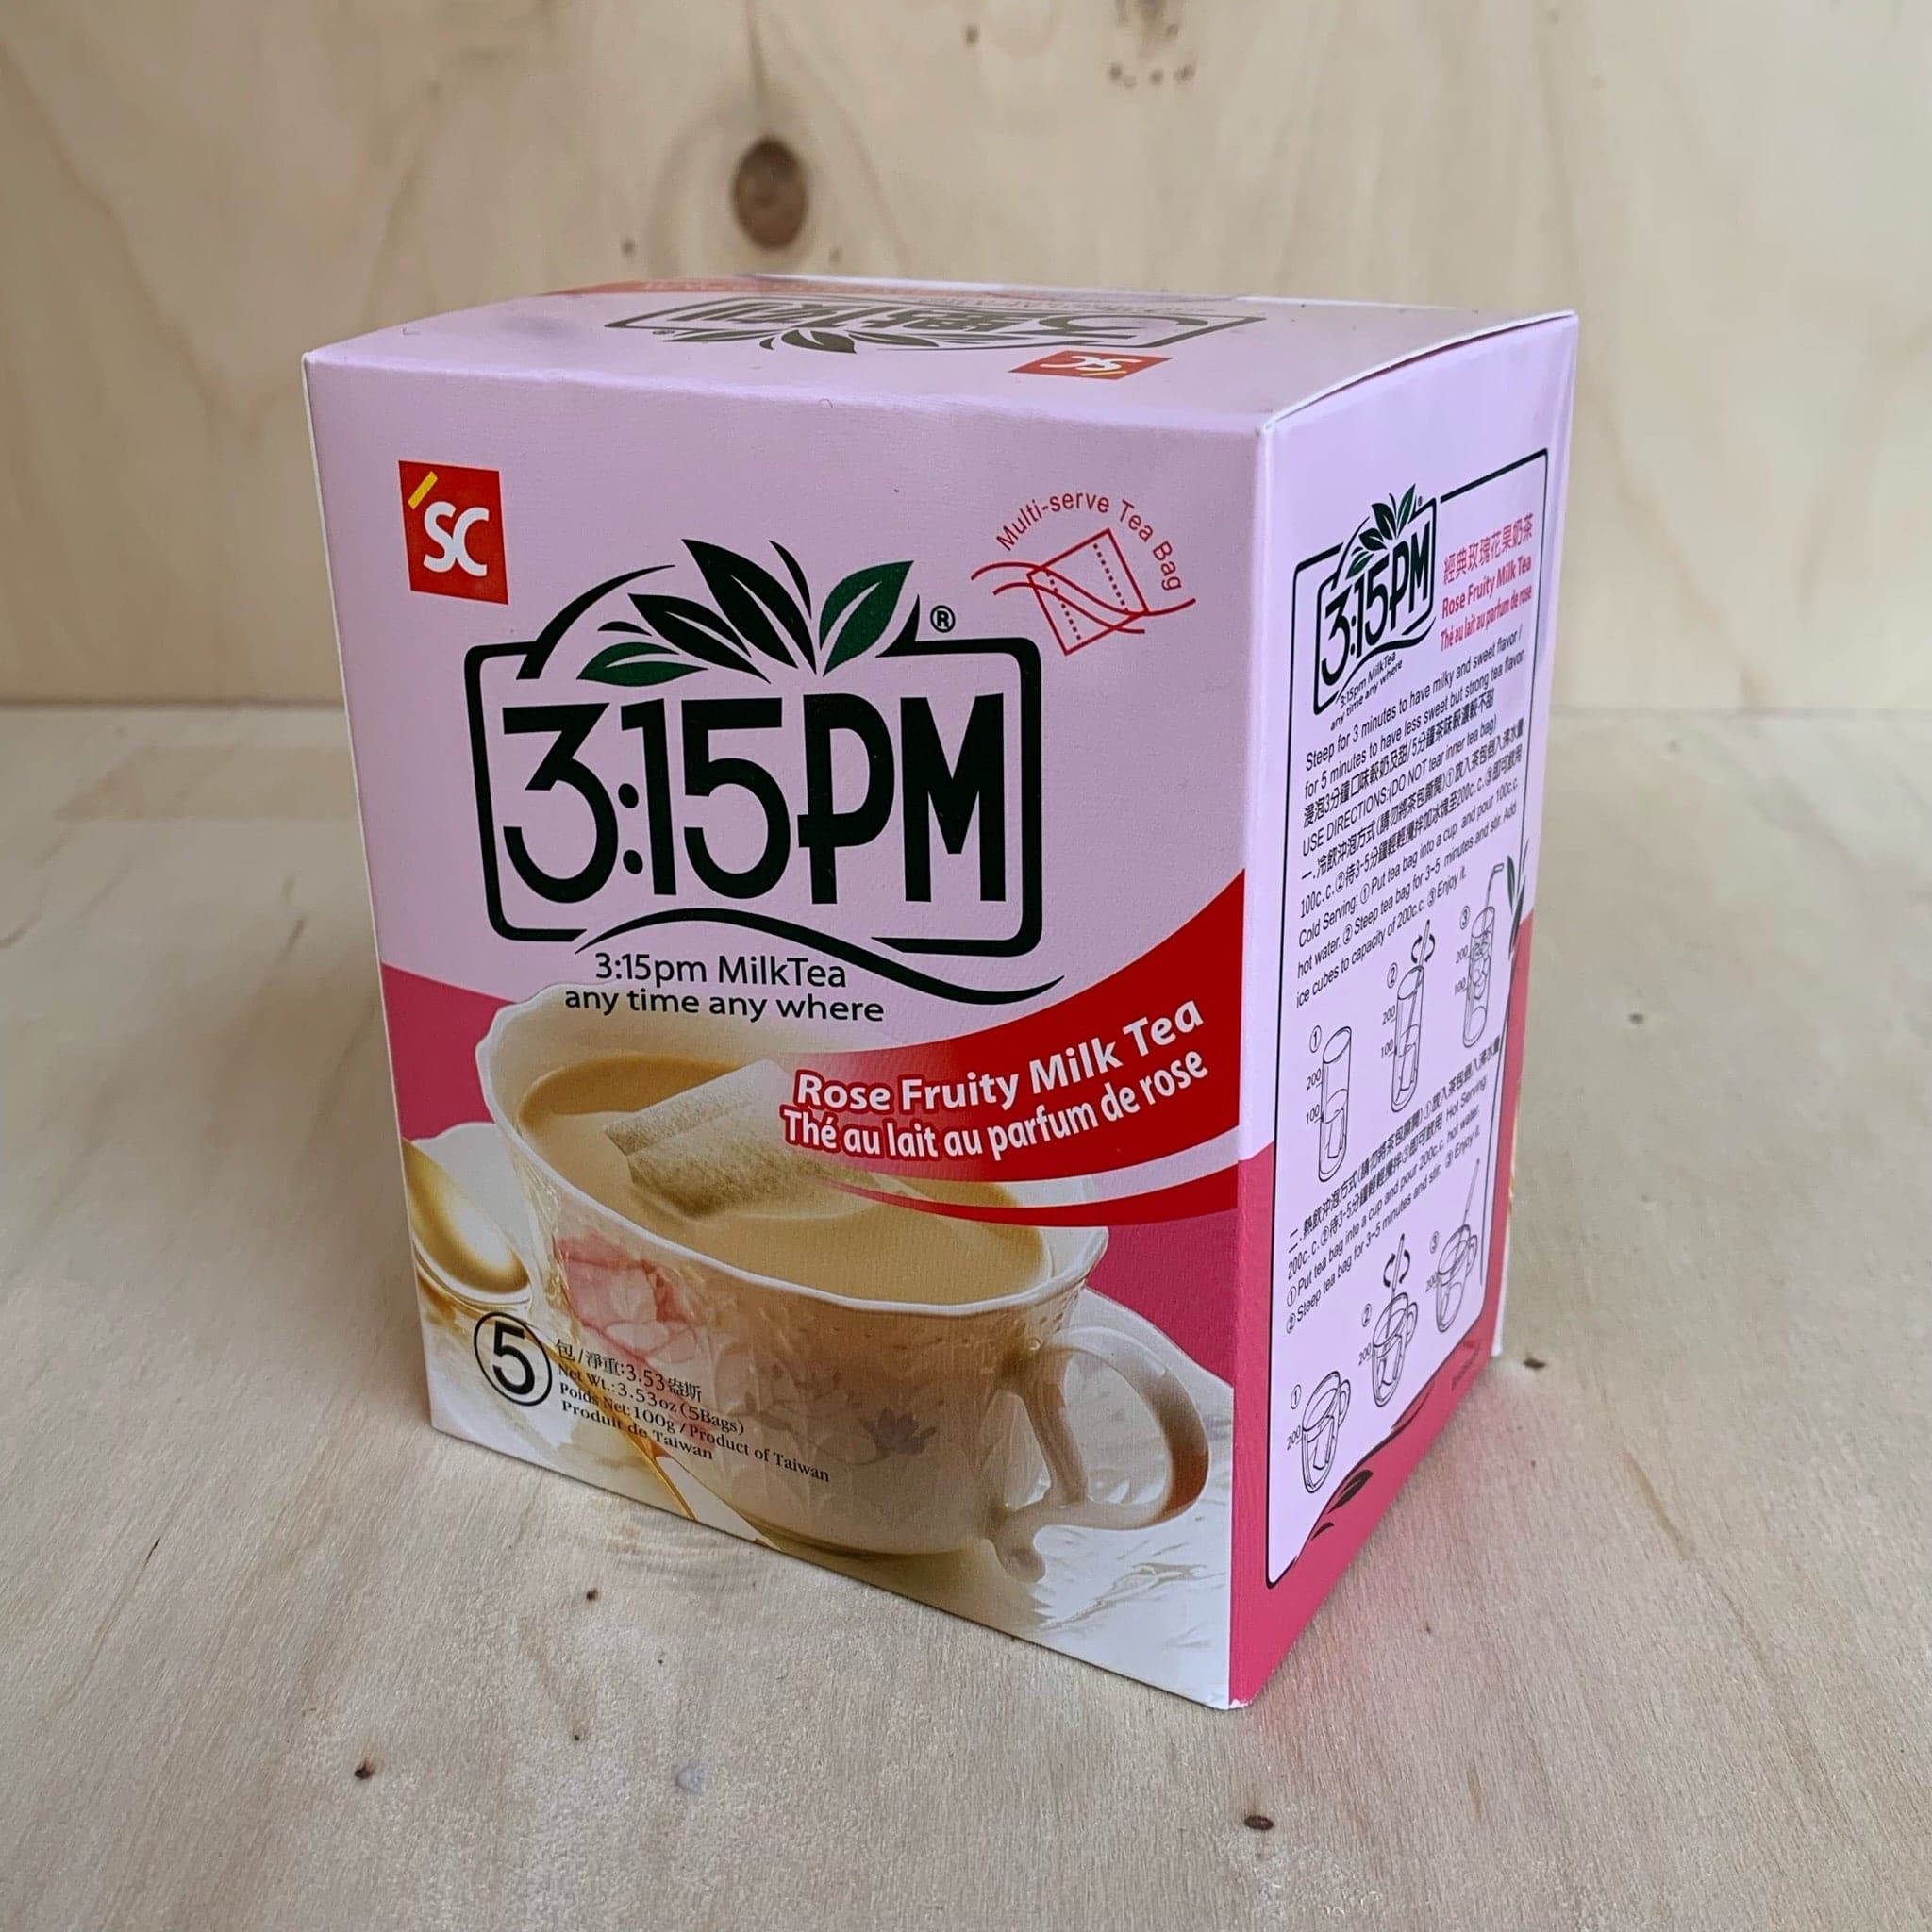 Rose Flavored Milk Tea (With Tea Bag) - 3.15PM